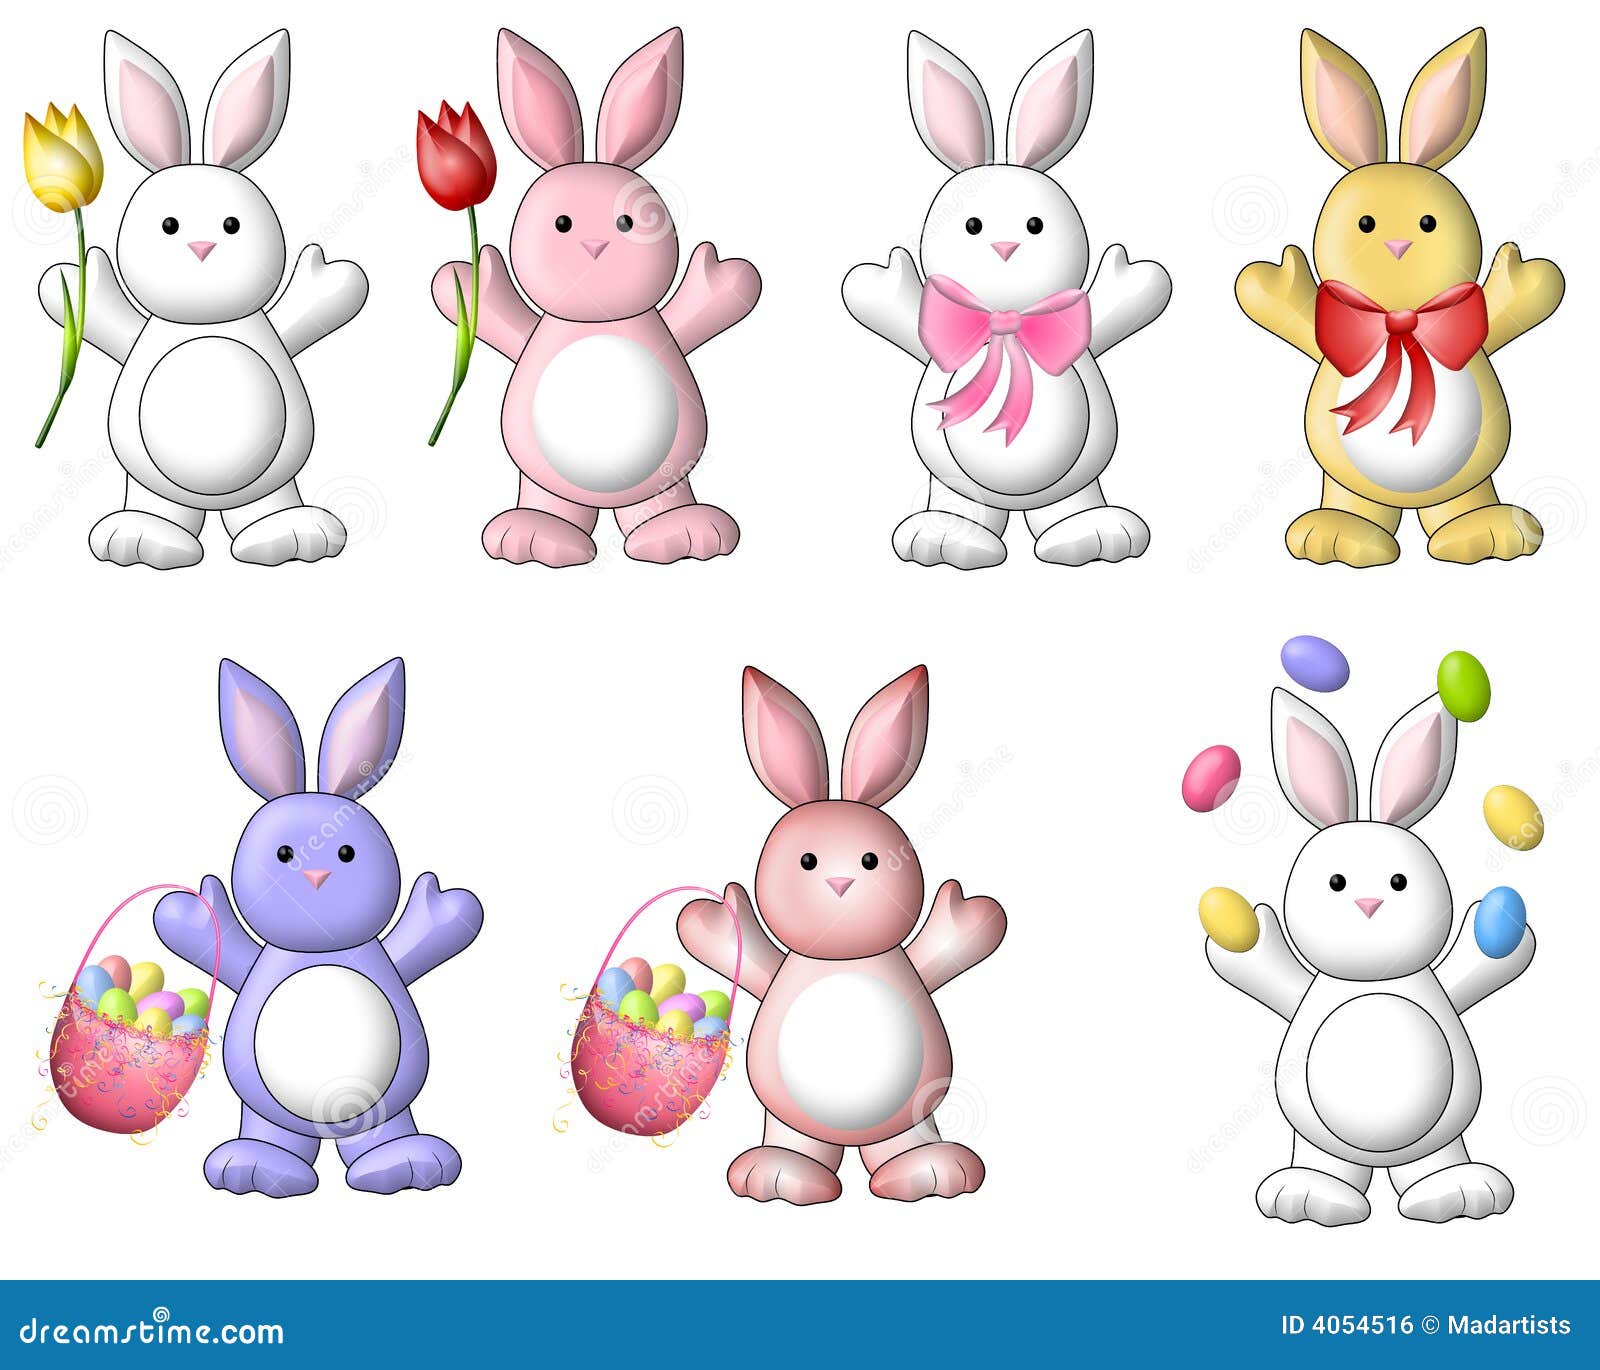 Cute Cartoon Easter Bunnies Clip Art Royalty Free Stock Image - Image